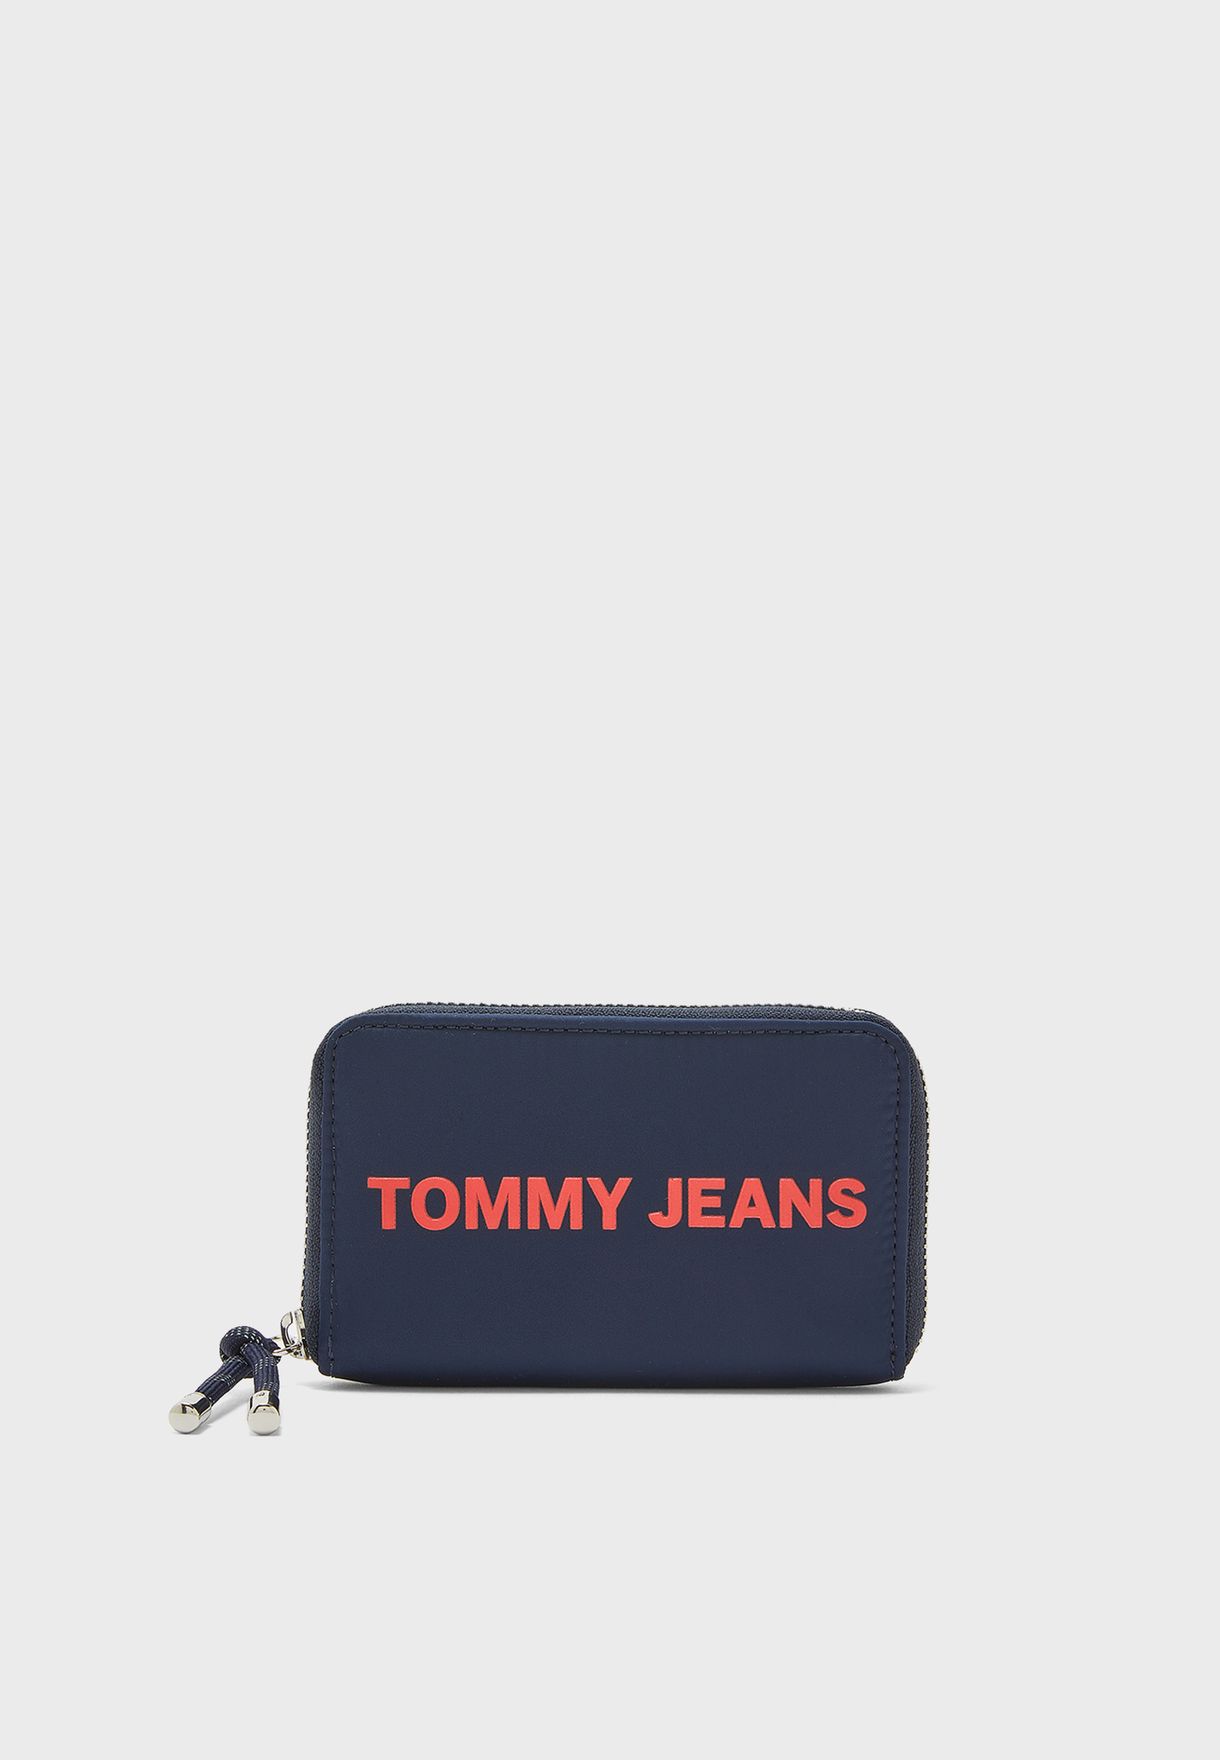 tommy jeans purse